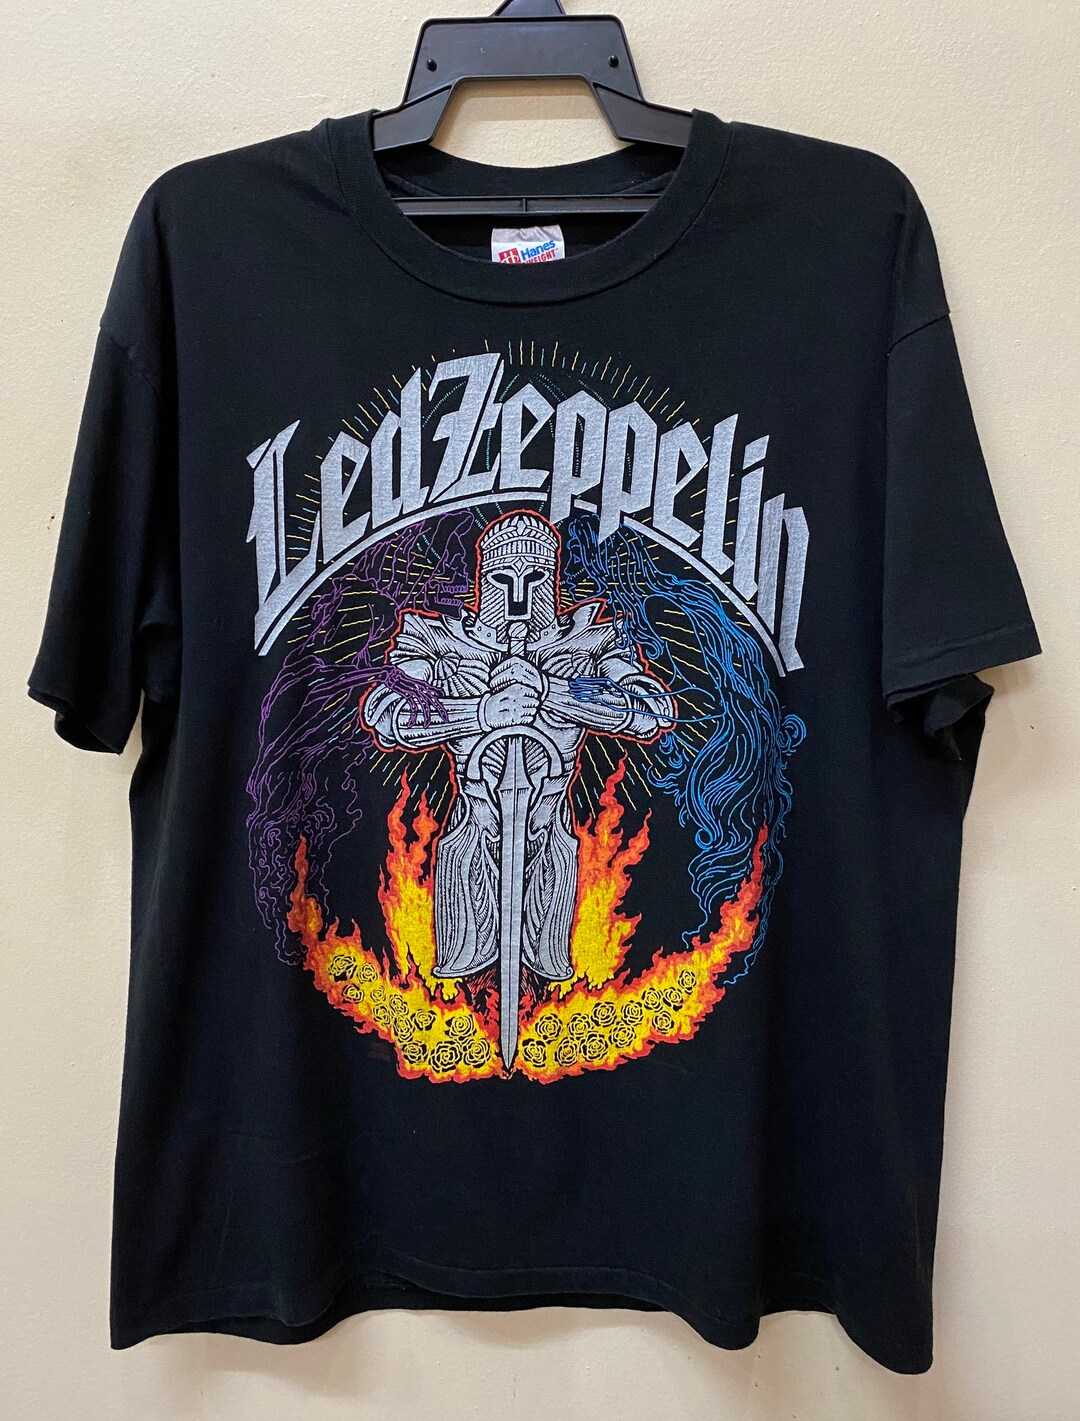 Vintage 90s Led Zeppelin Let The Music t shirt - Etsy 日本